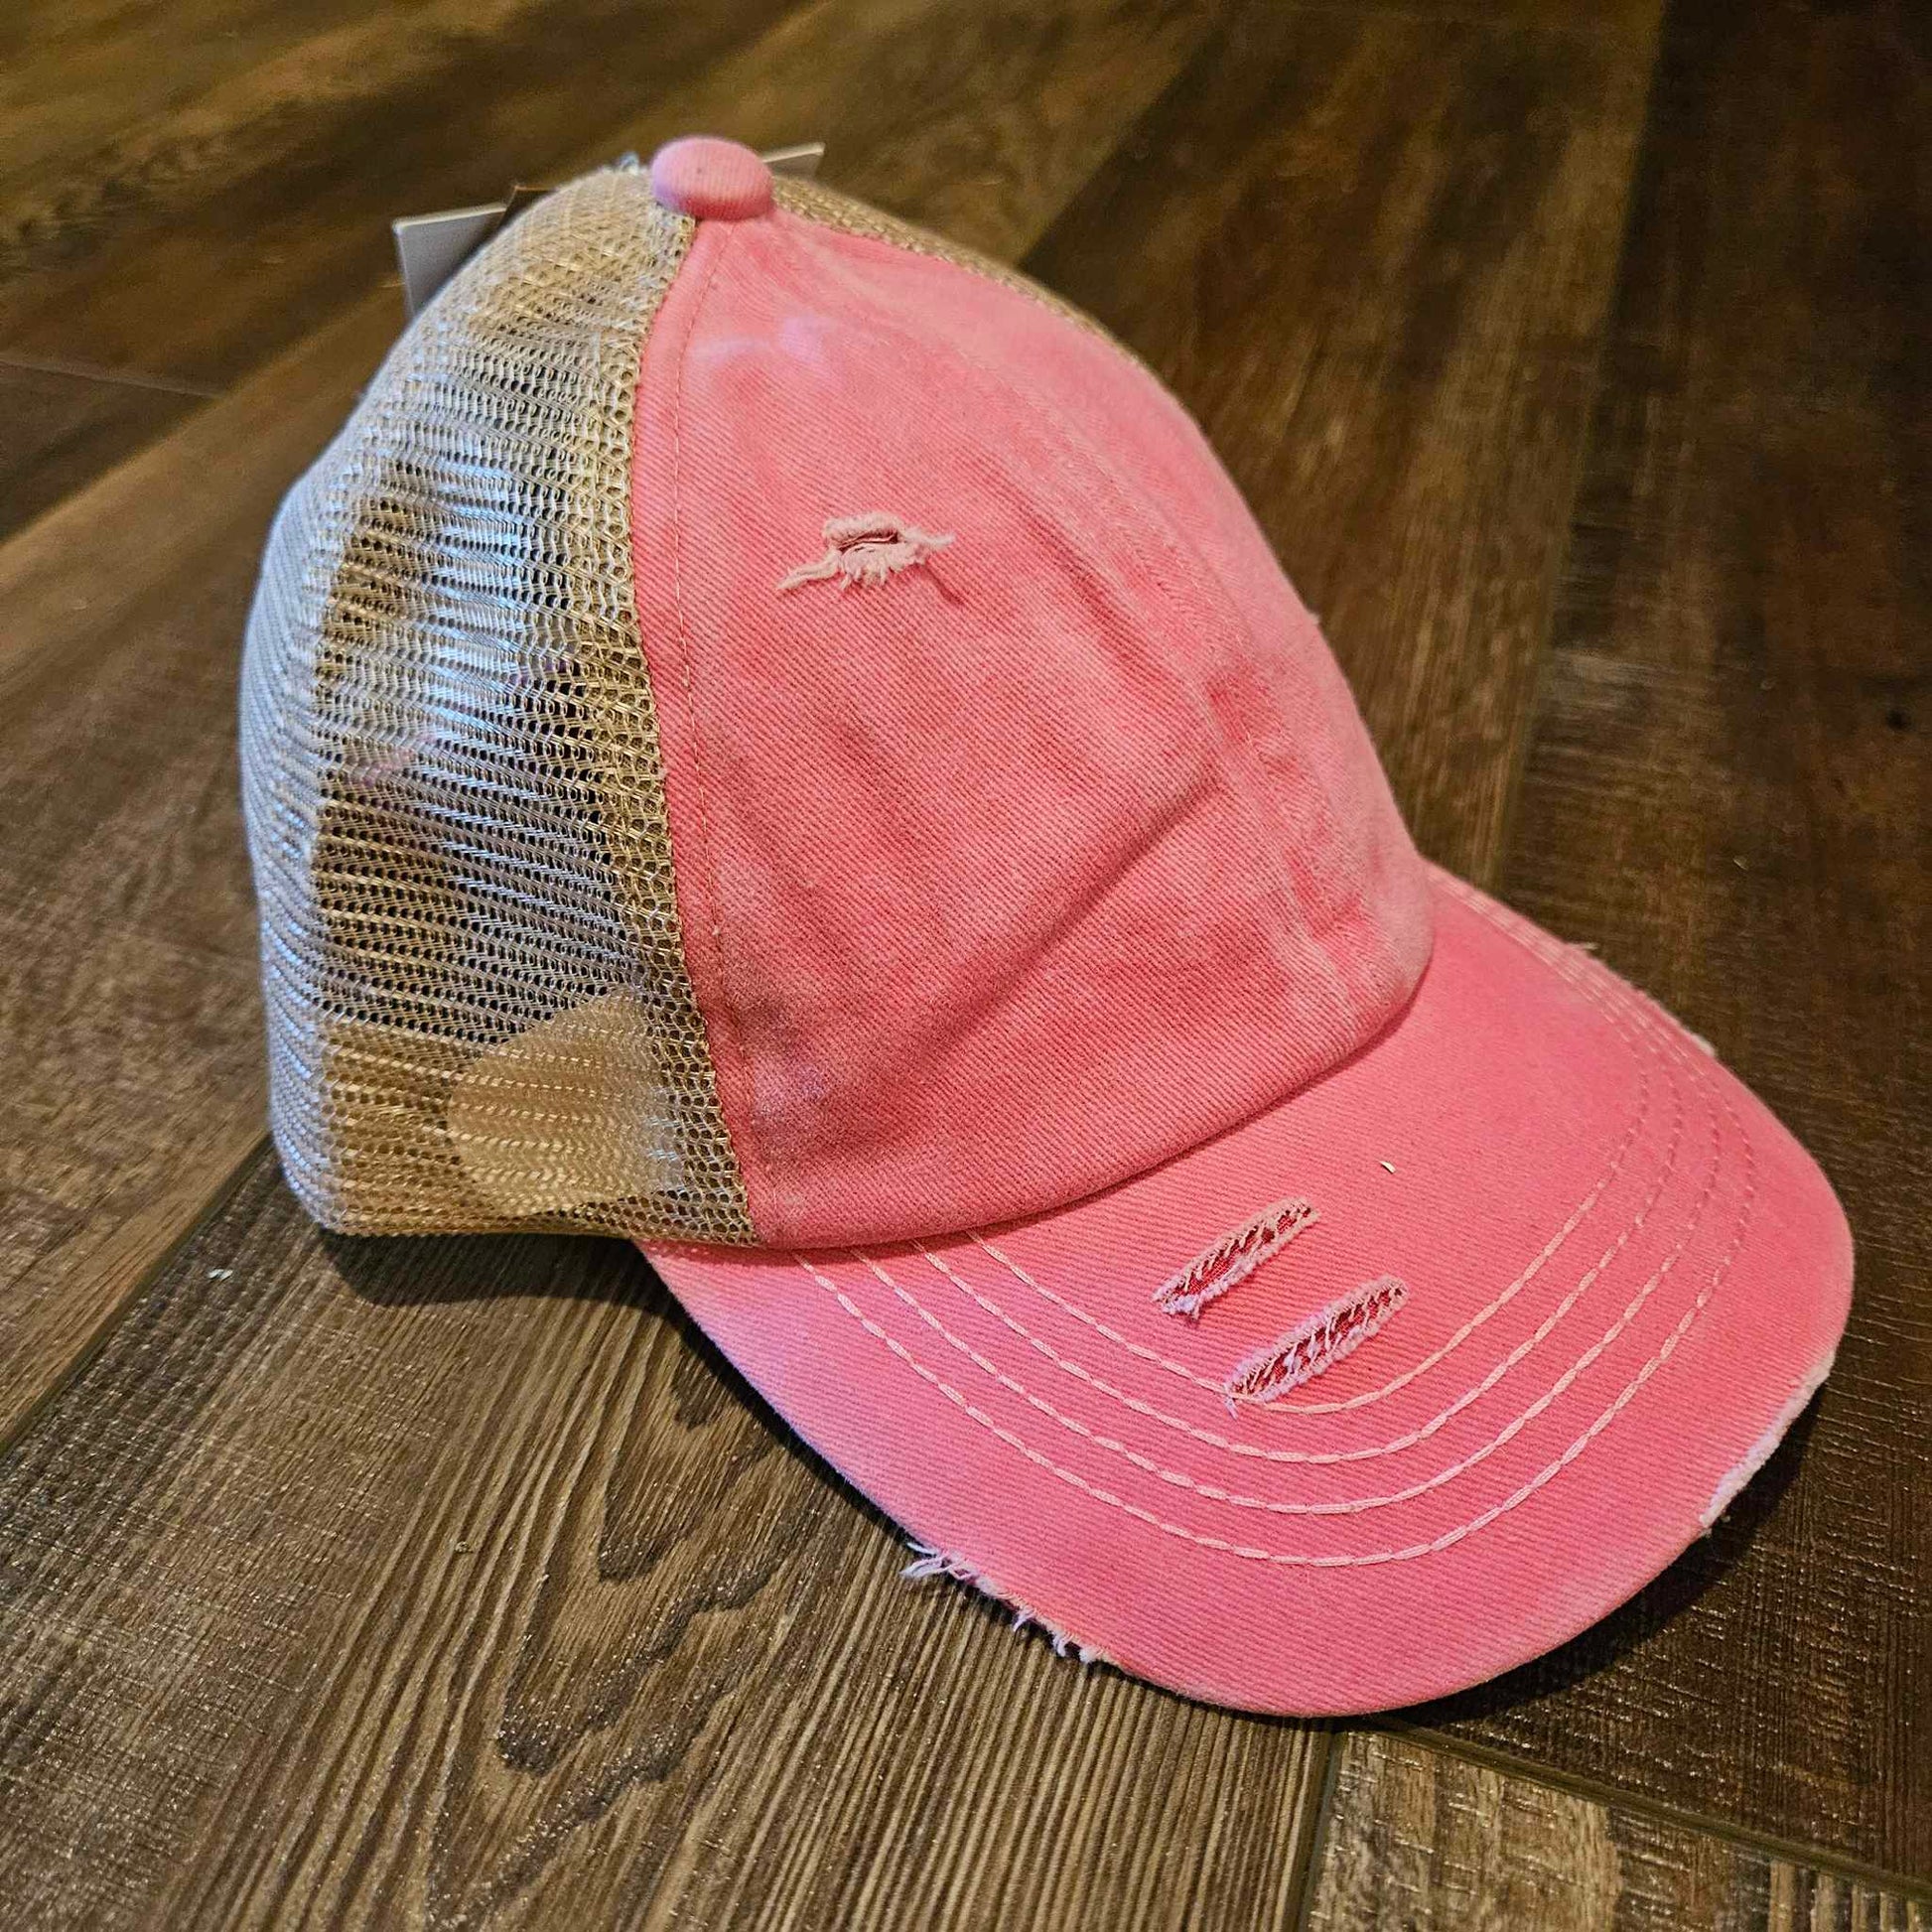 Distressed Pink Criss-Cross Ponytail Cap CC Brand Ponytail Baseball Cap Judson 